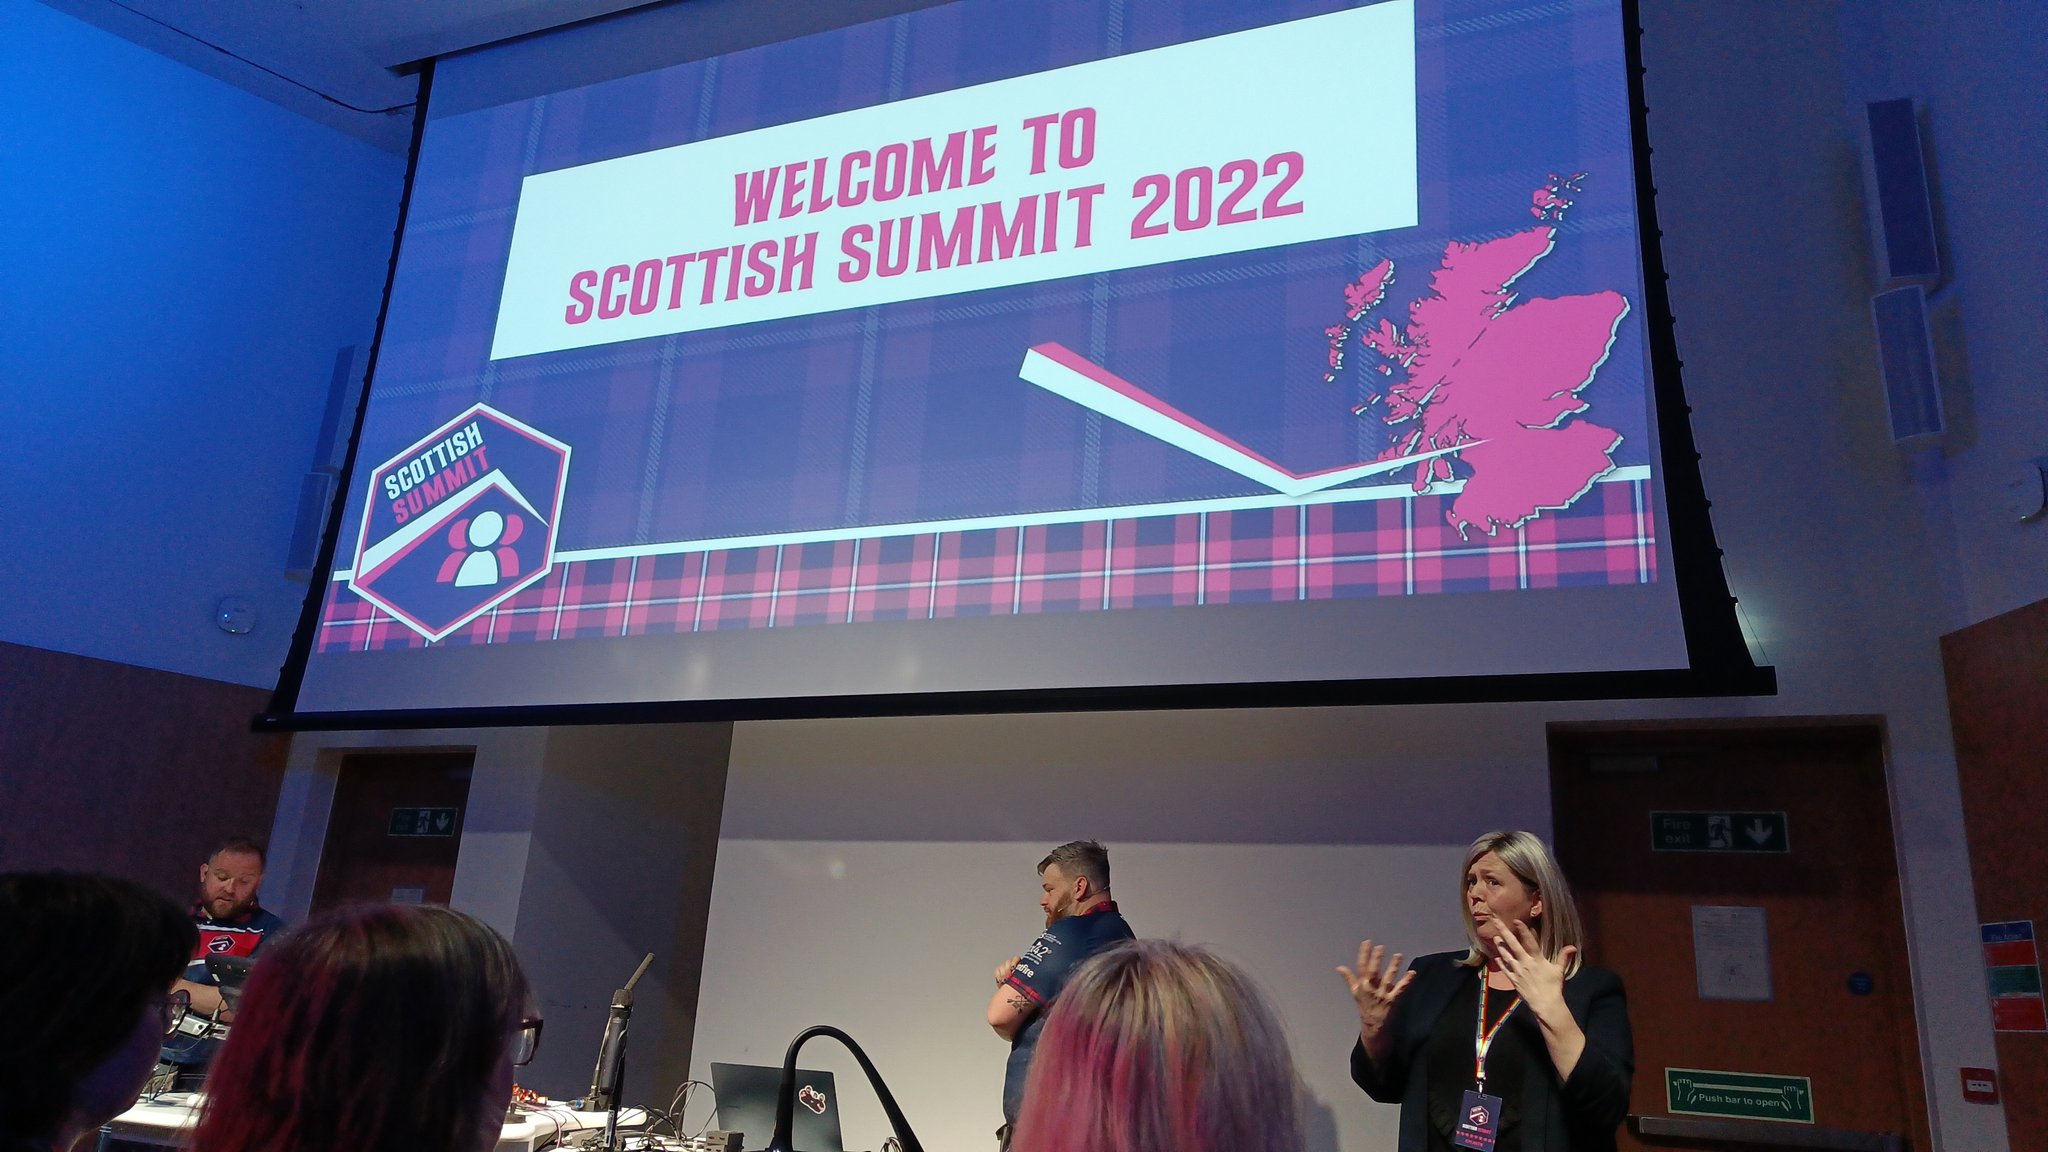 Scottish Summit day 2